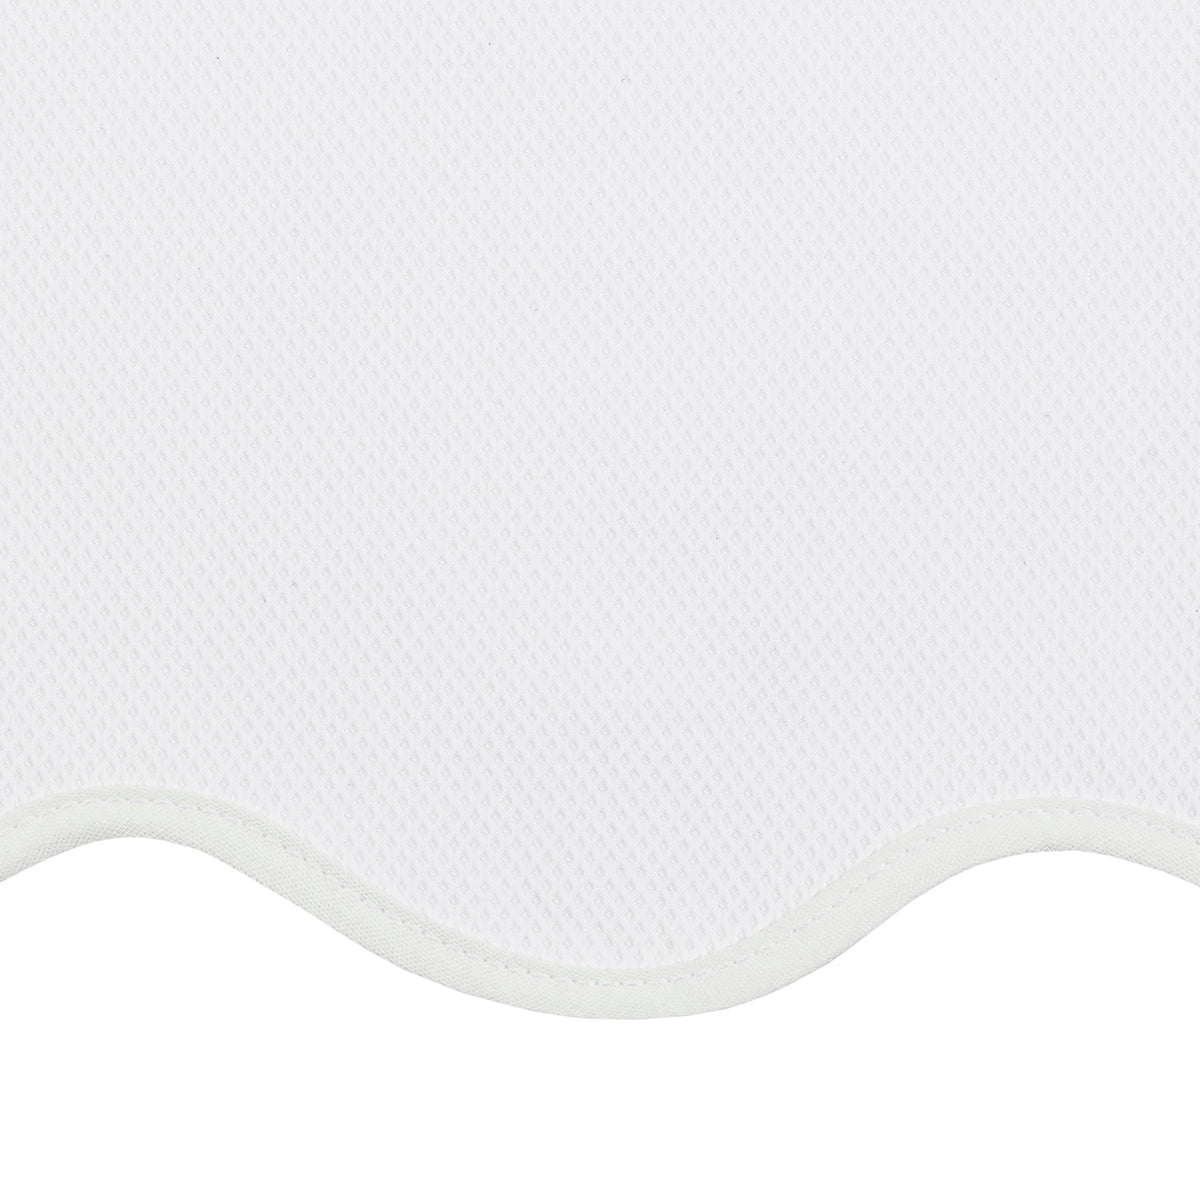 Swatch Sample of Matouk Camilla Pique Scallop Shower Curtain in White Color